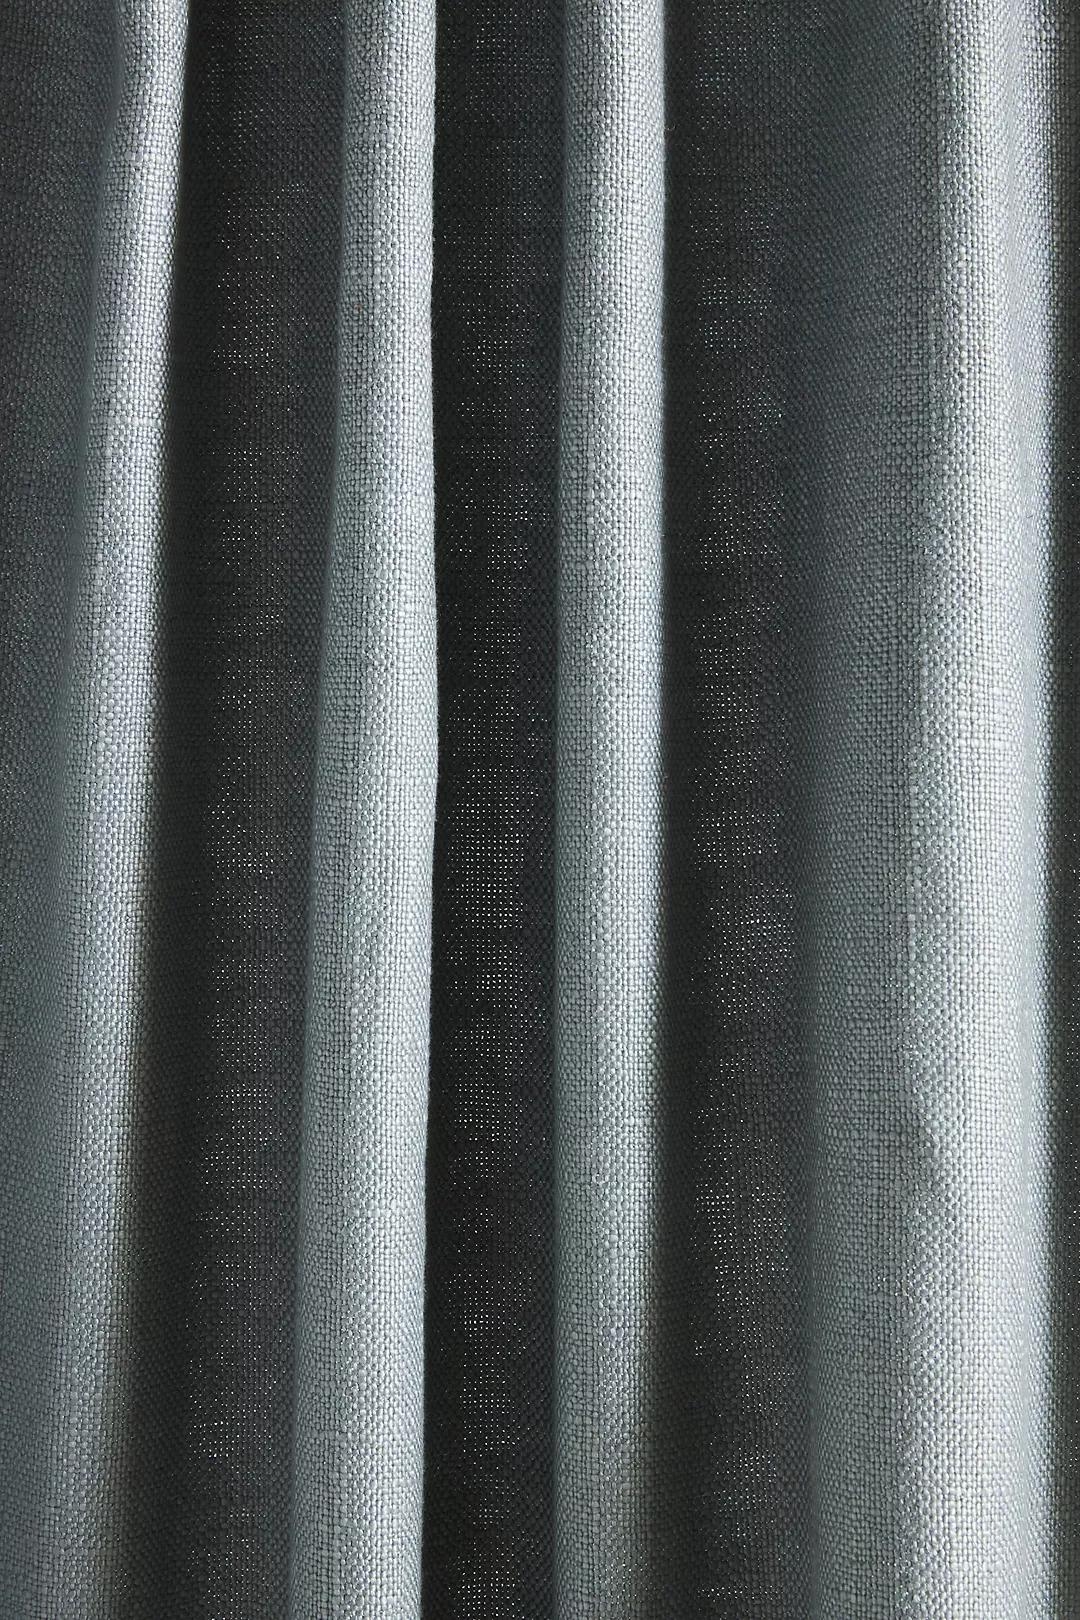 Luxe Linen Blend Curtain - Image 3